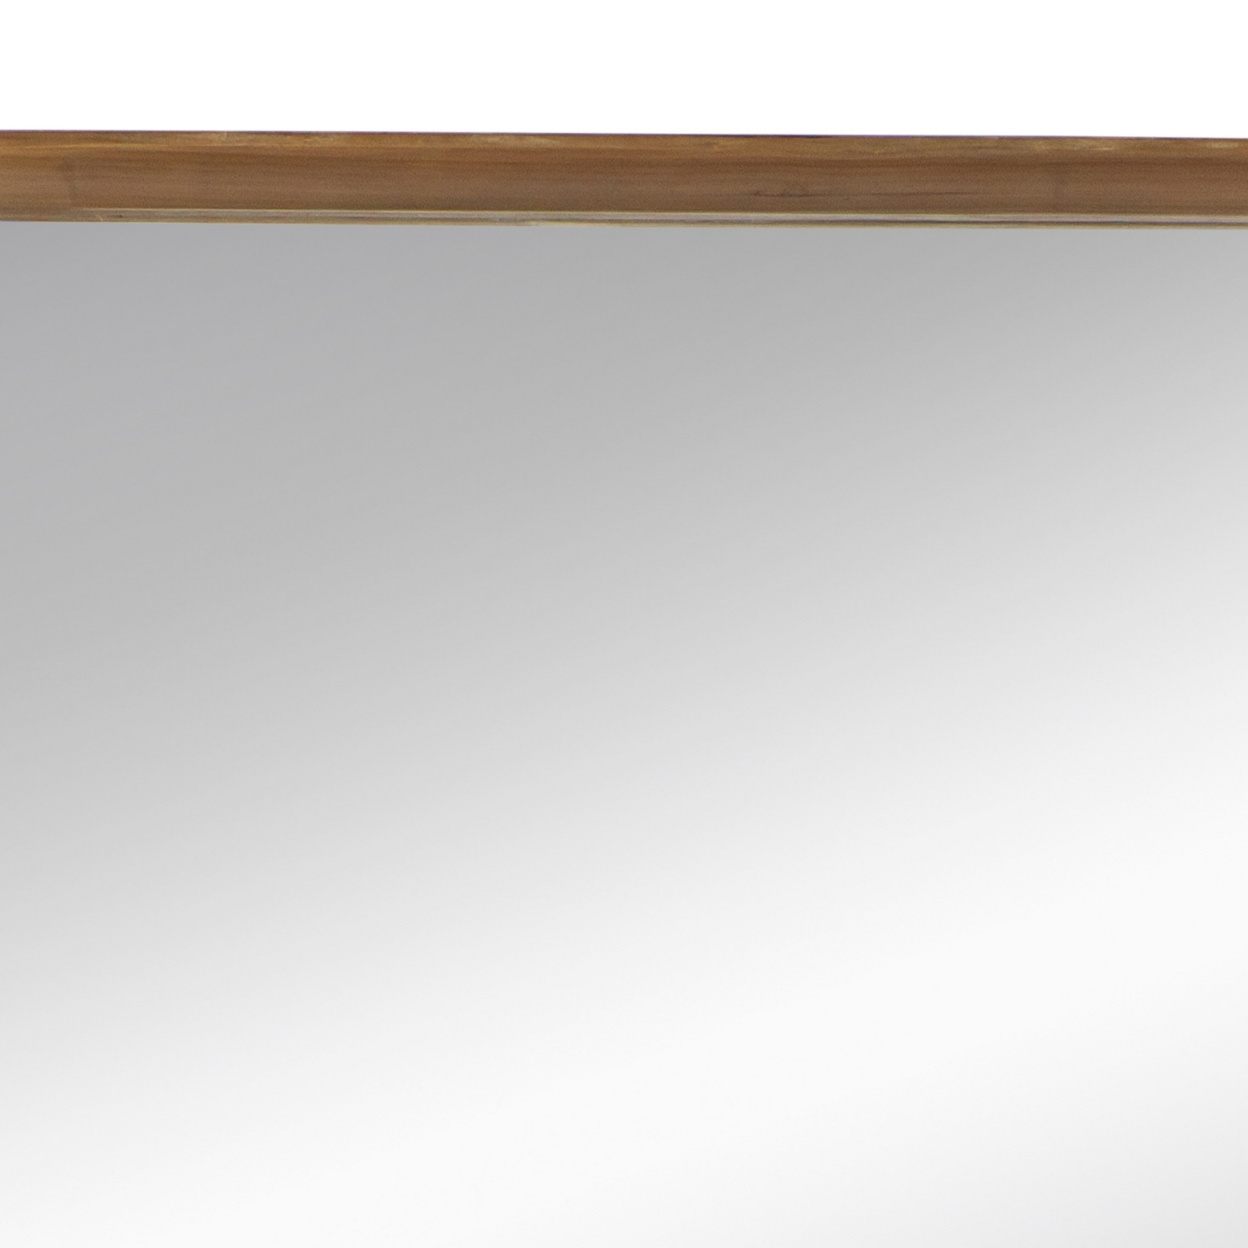 Roe 32 Inch Wall Mirror, Brown Curved Pine Wood Frame, Minimalistic- Saltoro Sherpi